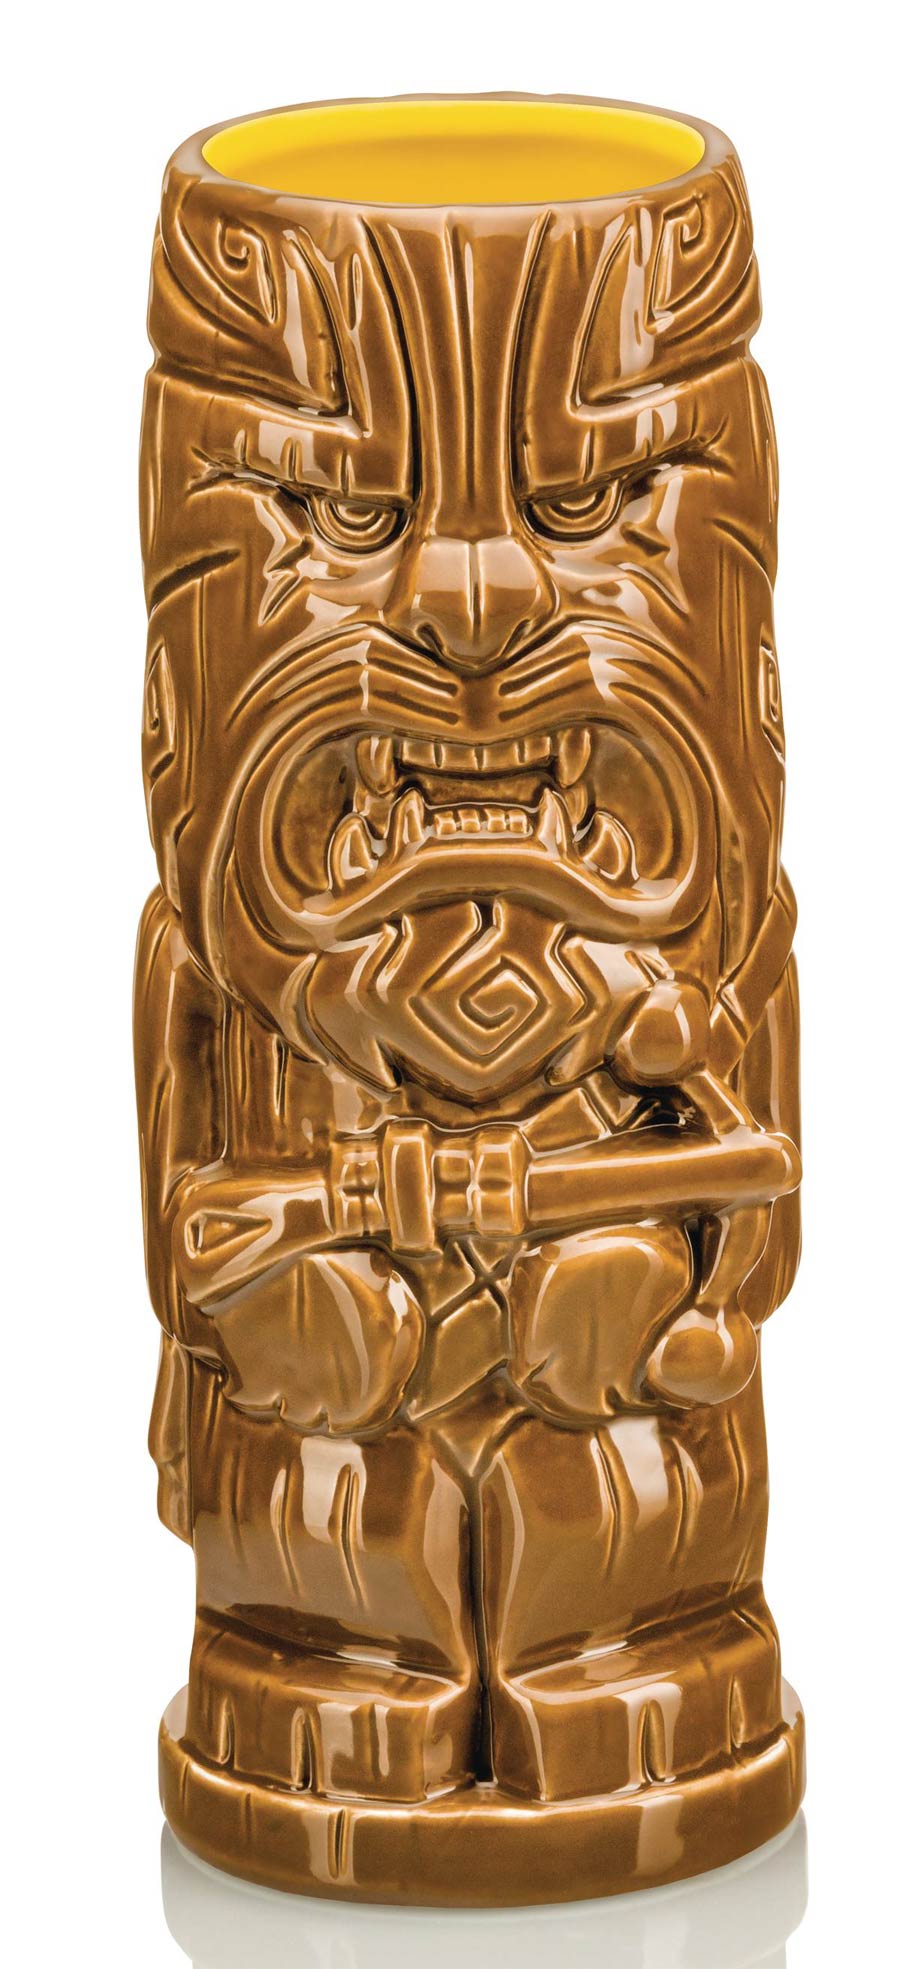 Star Wars Ceramic Tiki Mug - Chewbacca